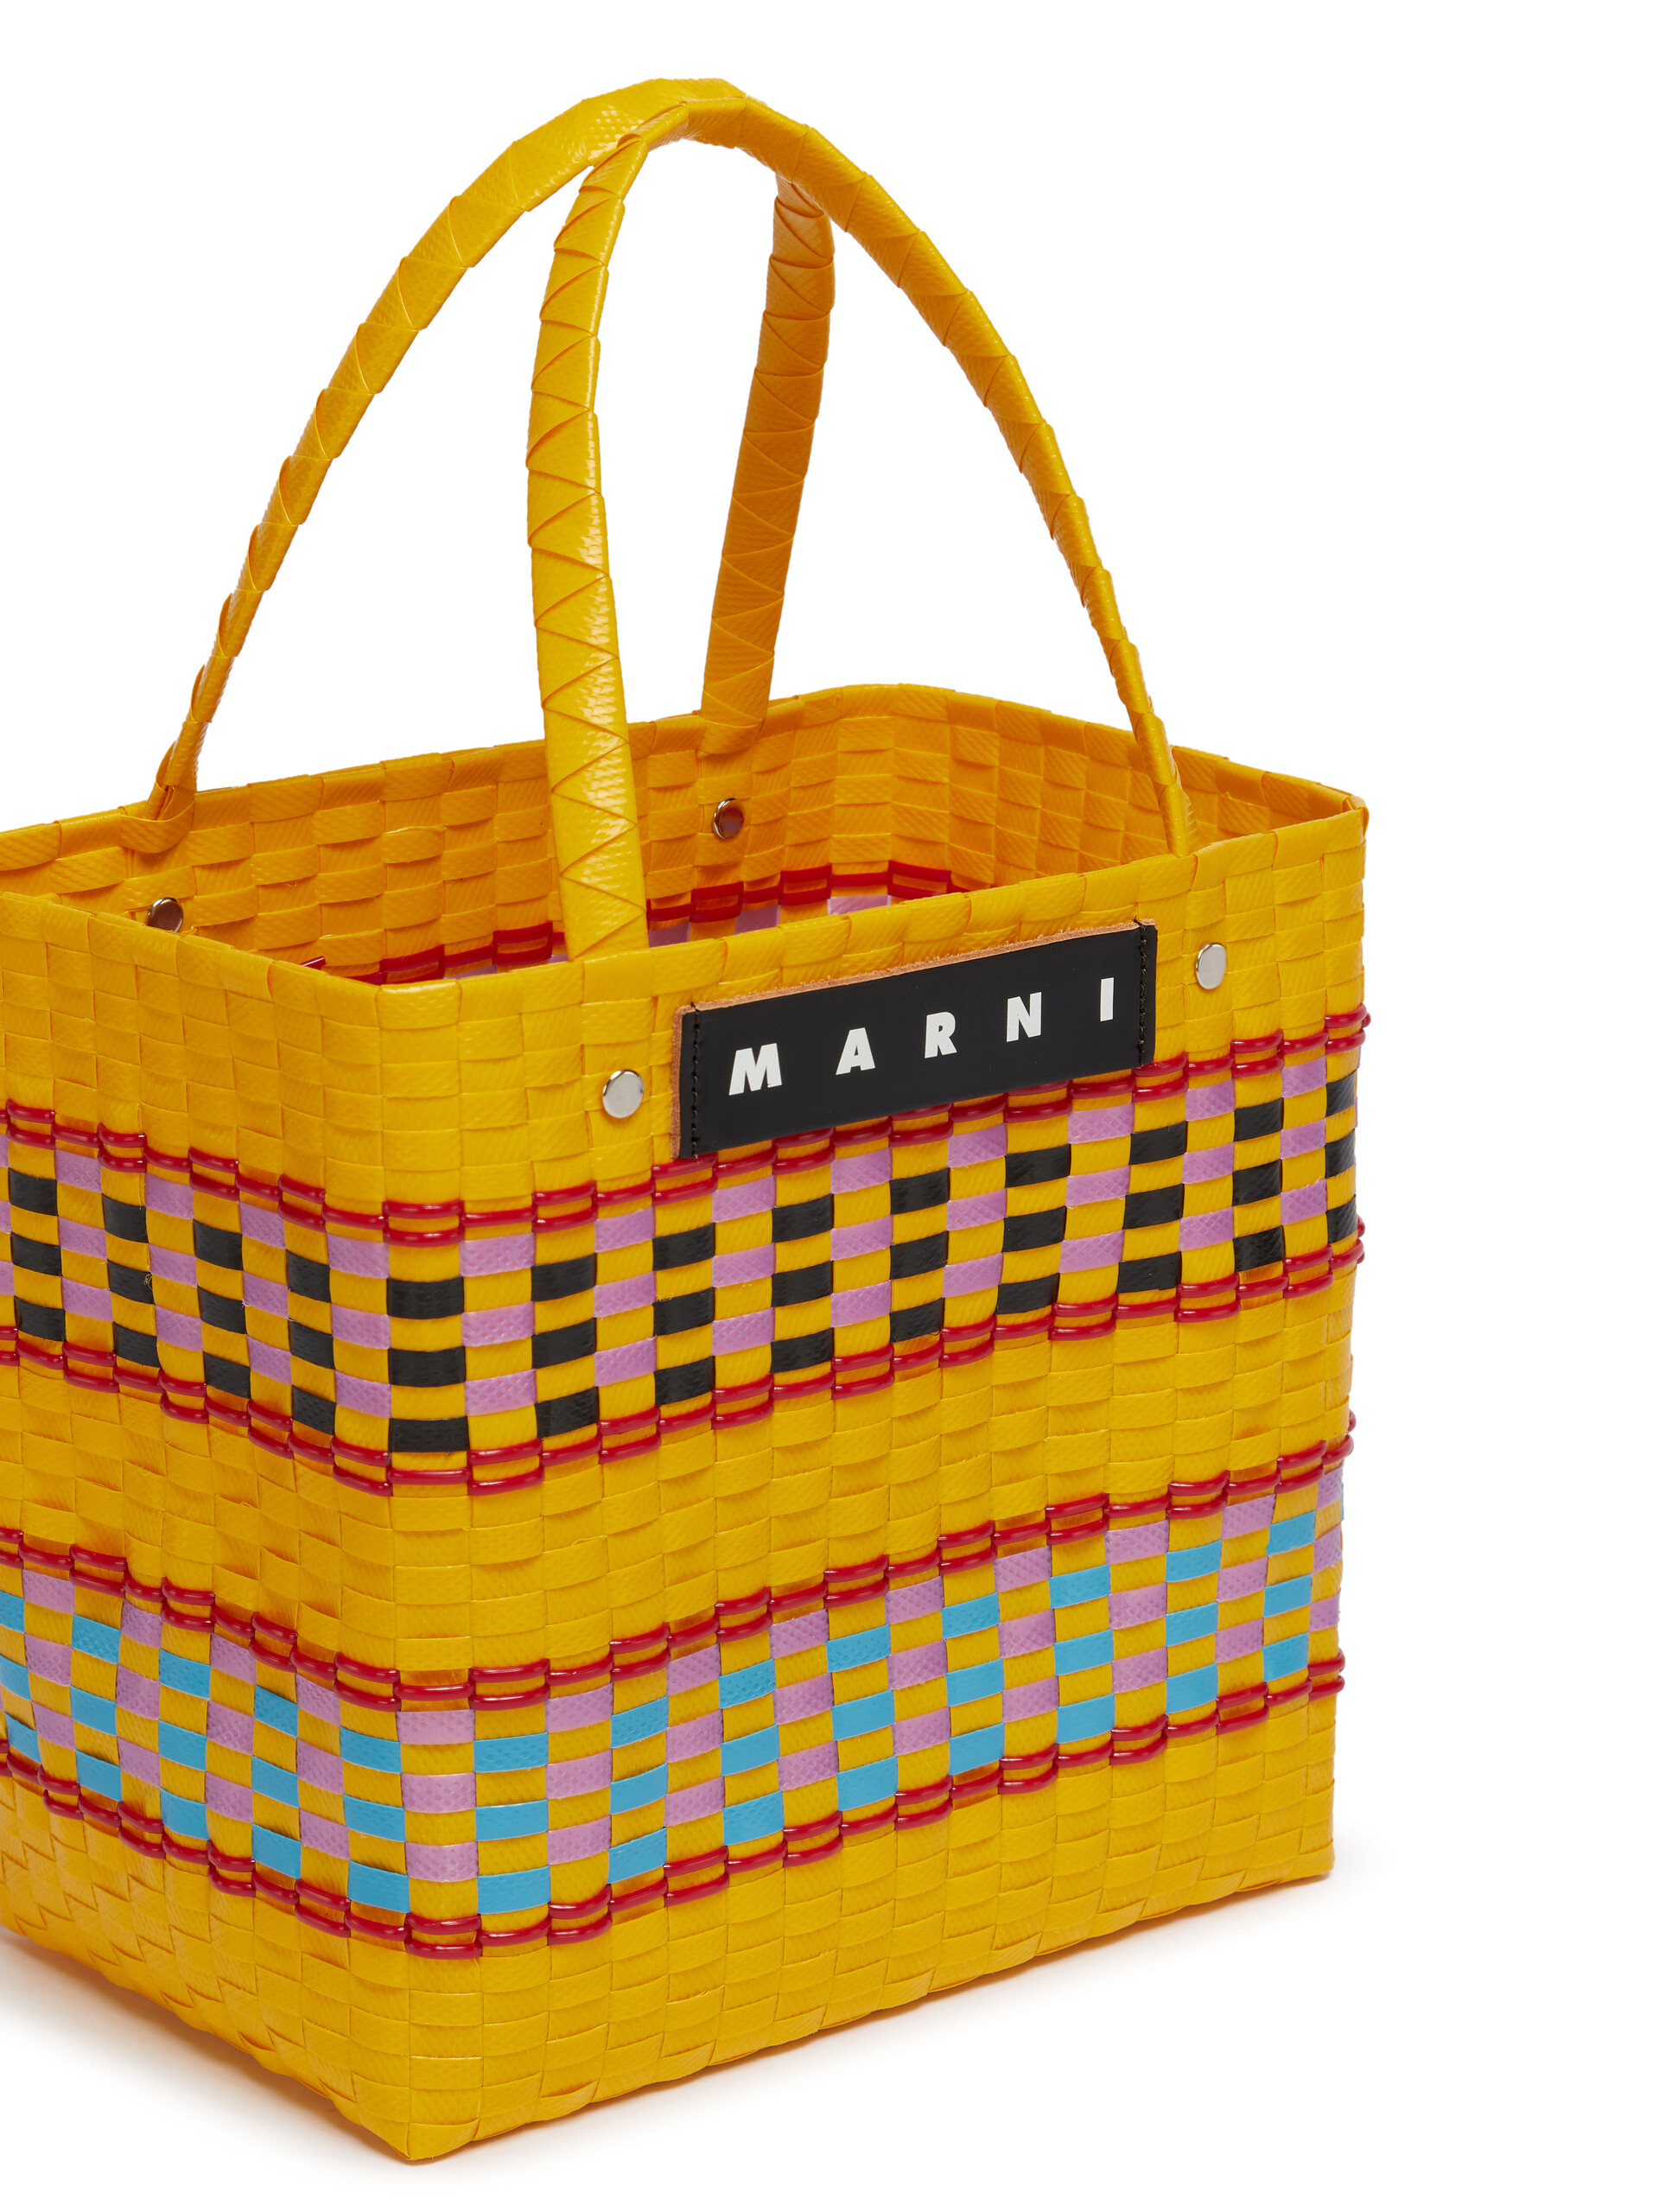 Small Purple Marni Market Retro Basket Bag - Shopping Bags - Image 4